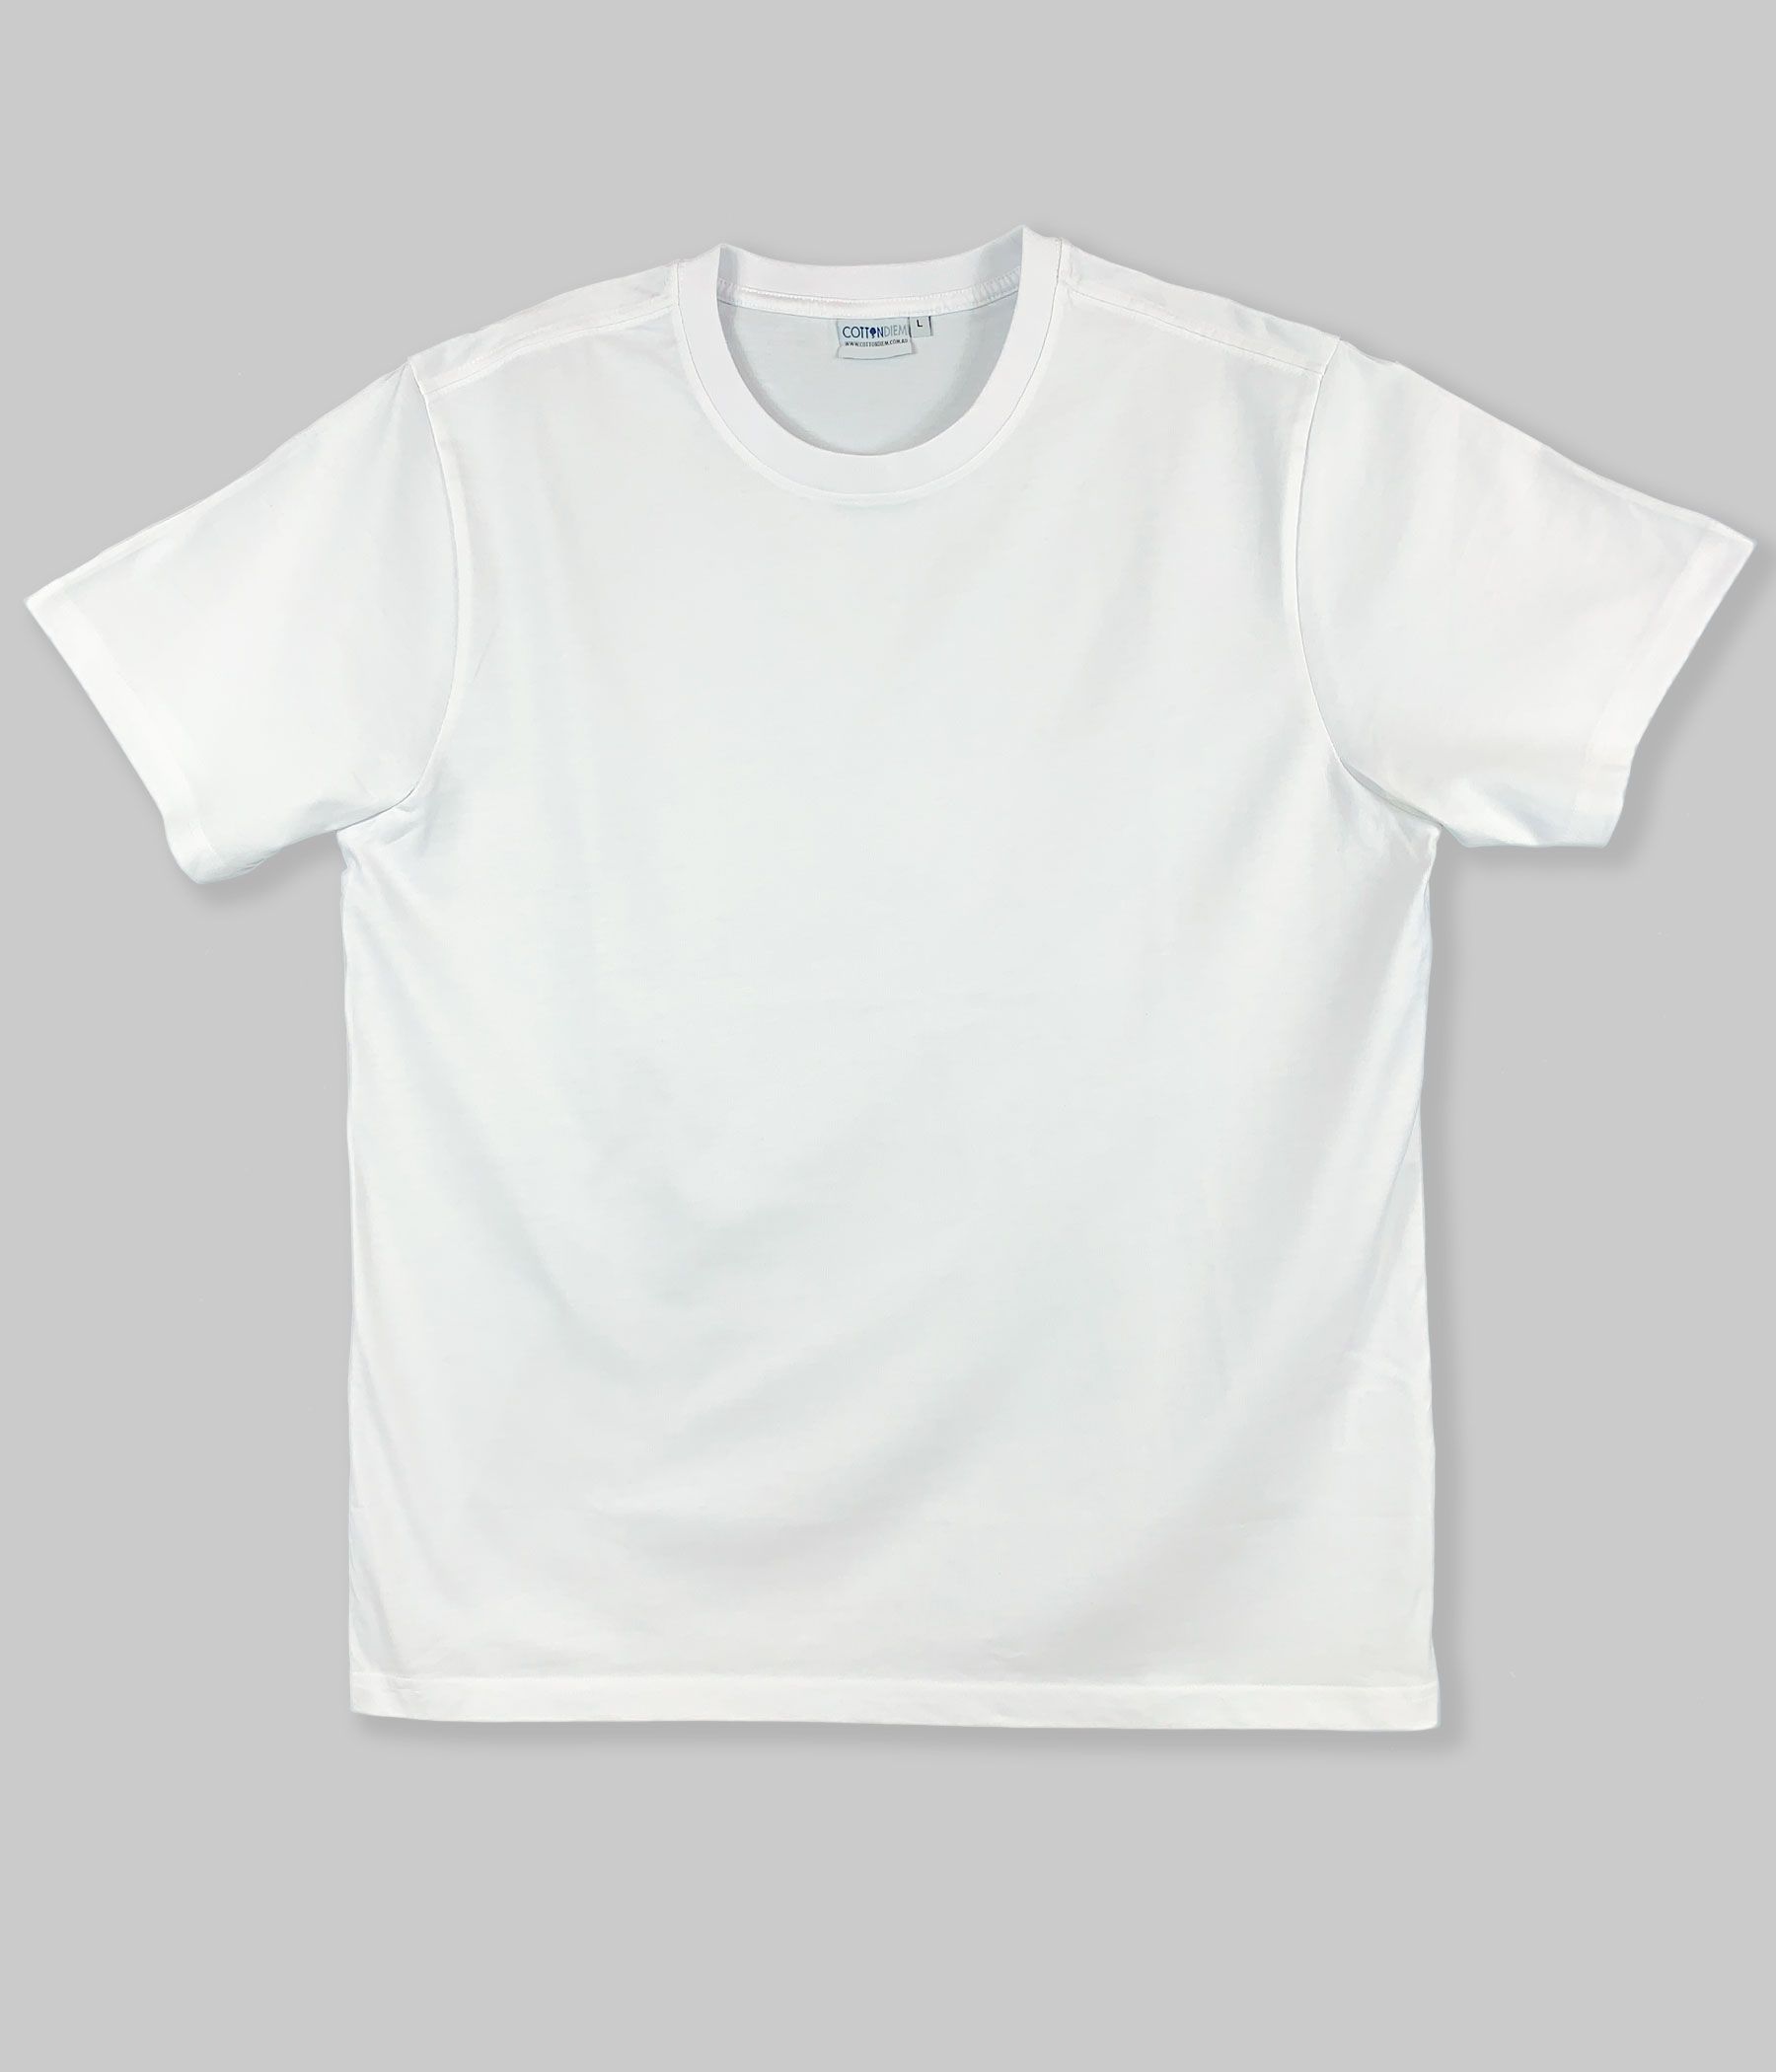 Wholesale blank t-shirts Australia screen DTG,